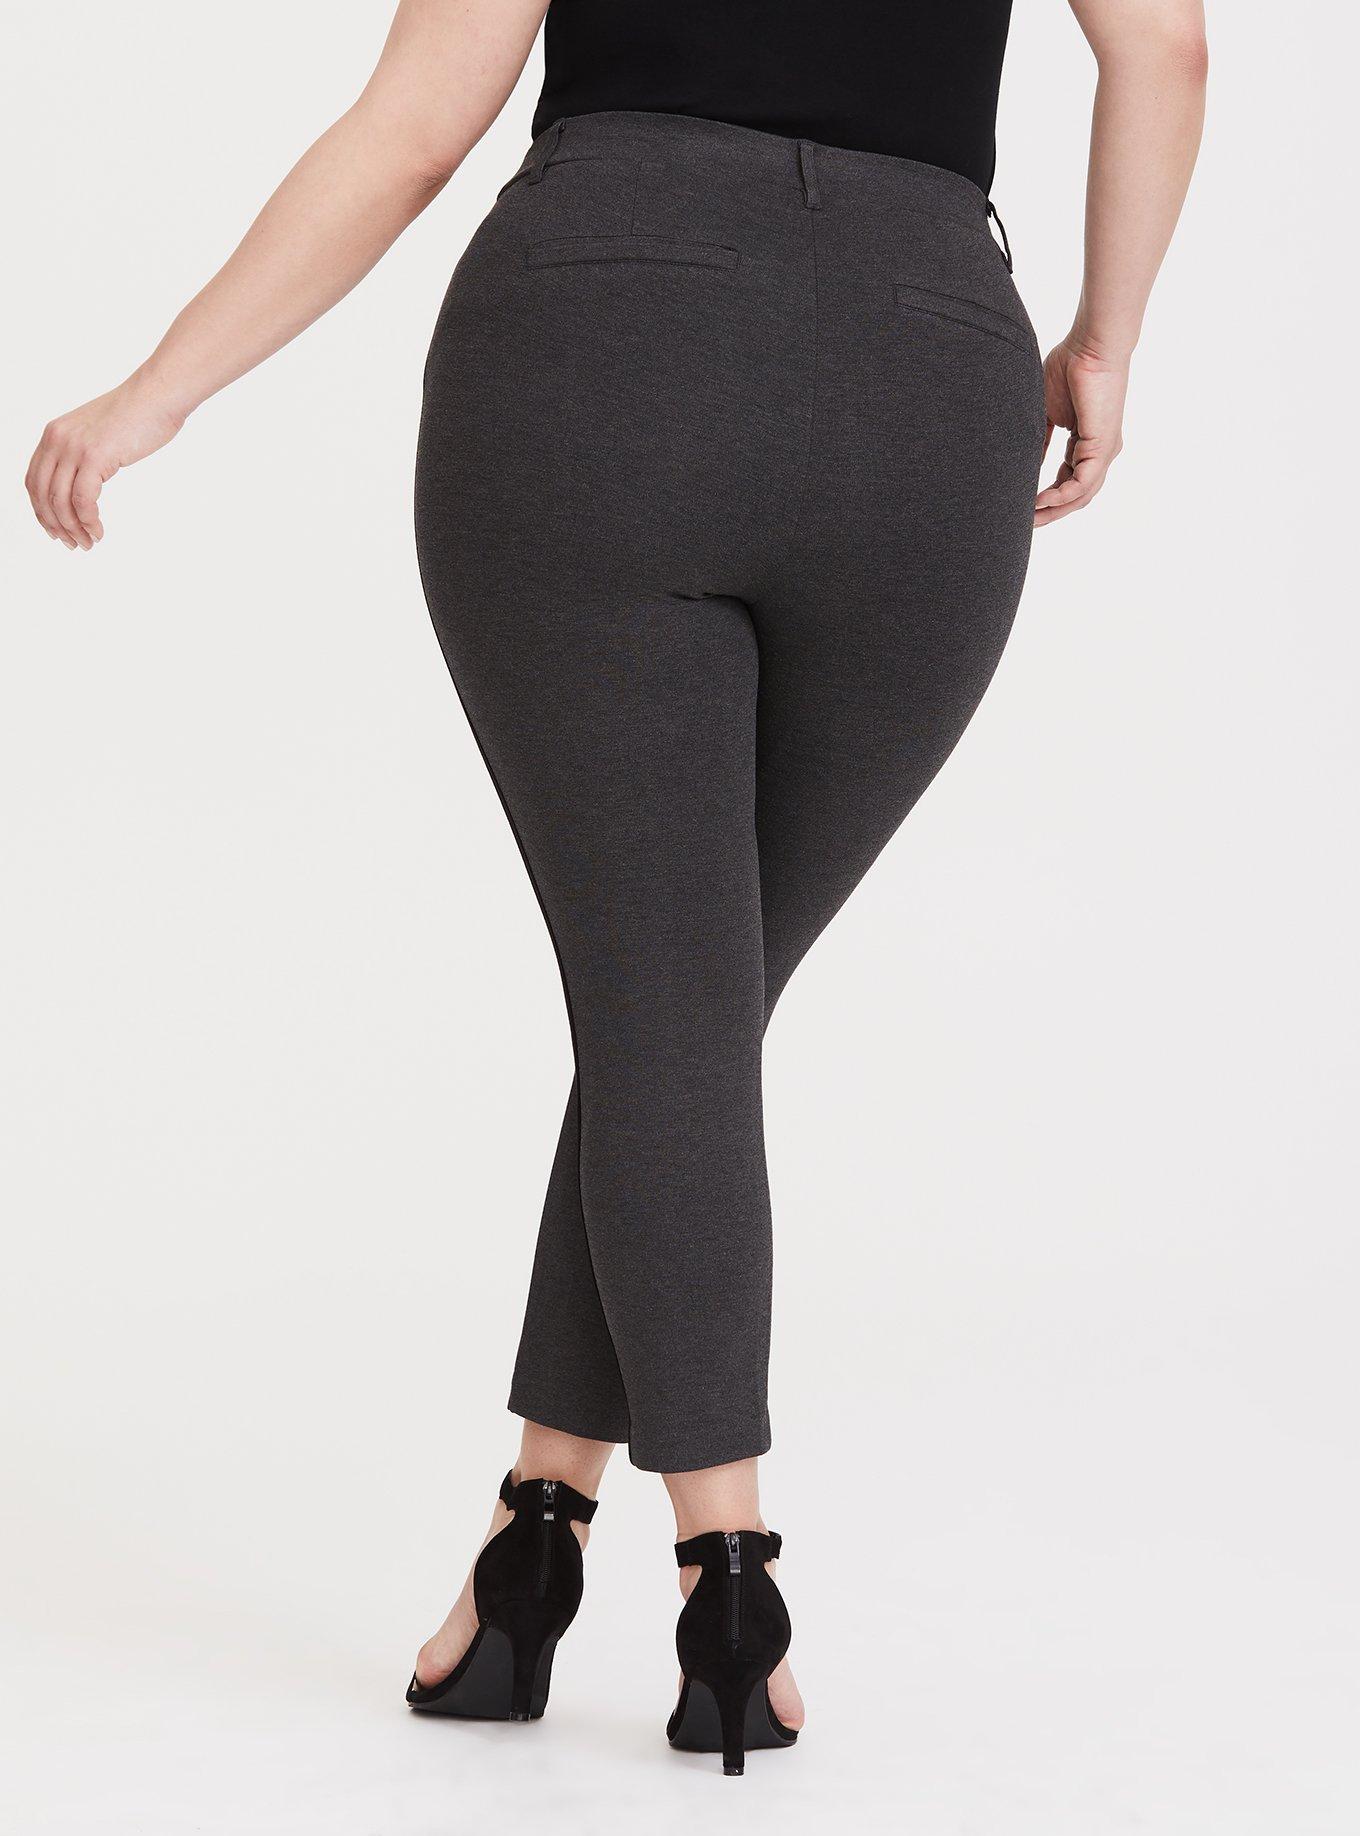 Plus Size - Grey & Black Stripe Ponte Stretch Pull-On Pant - Torrid